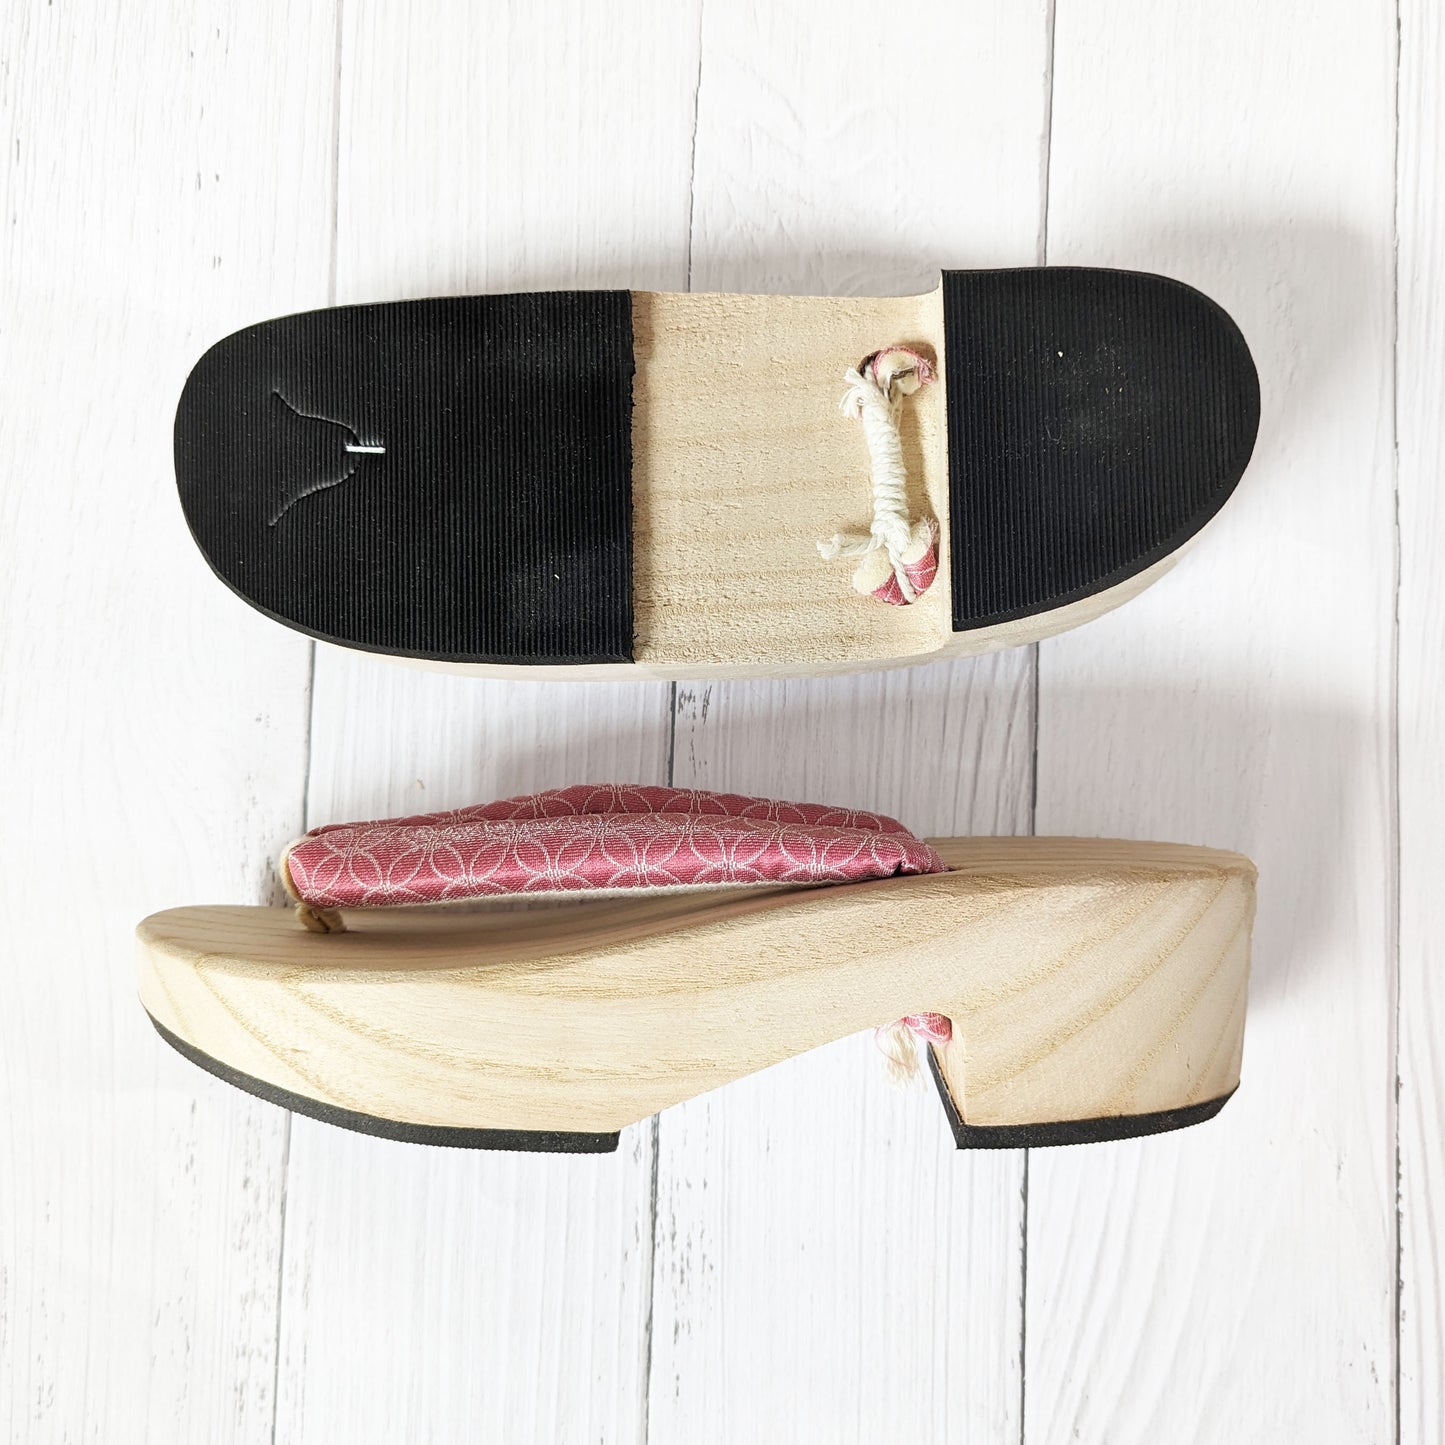 Japanese Women's Geta Sandals - Pink Shippo